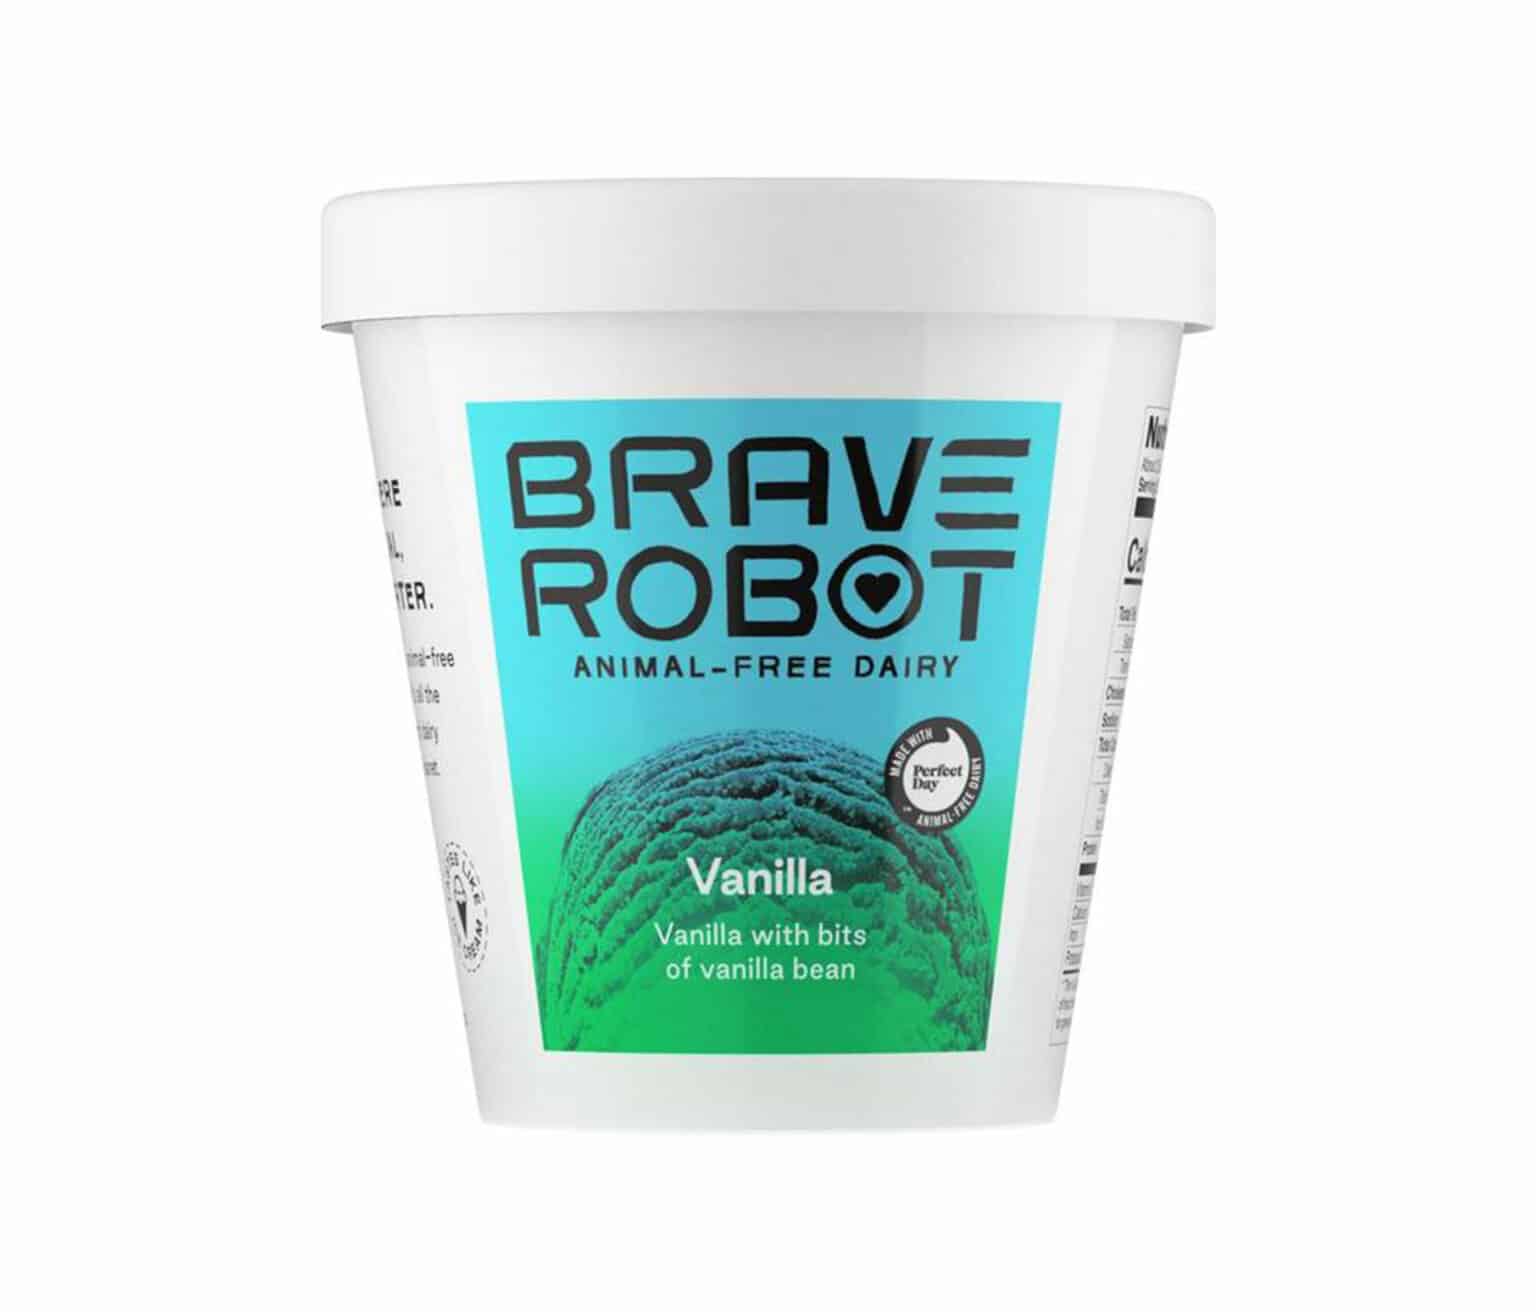 who owns brave robot ice cream